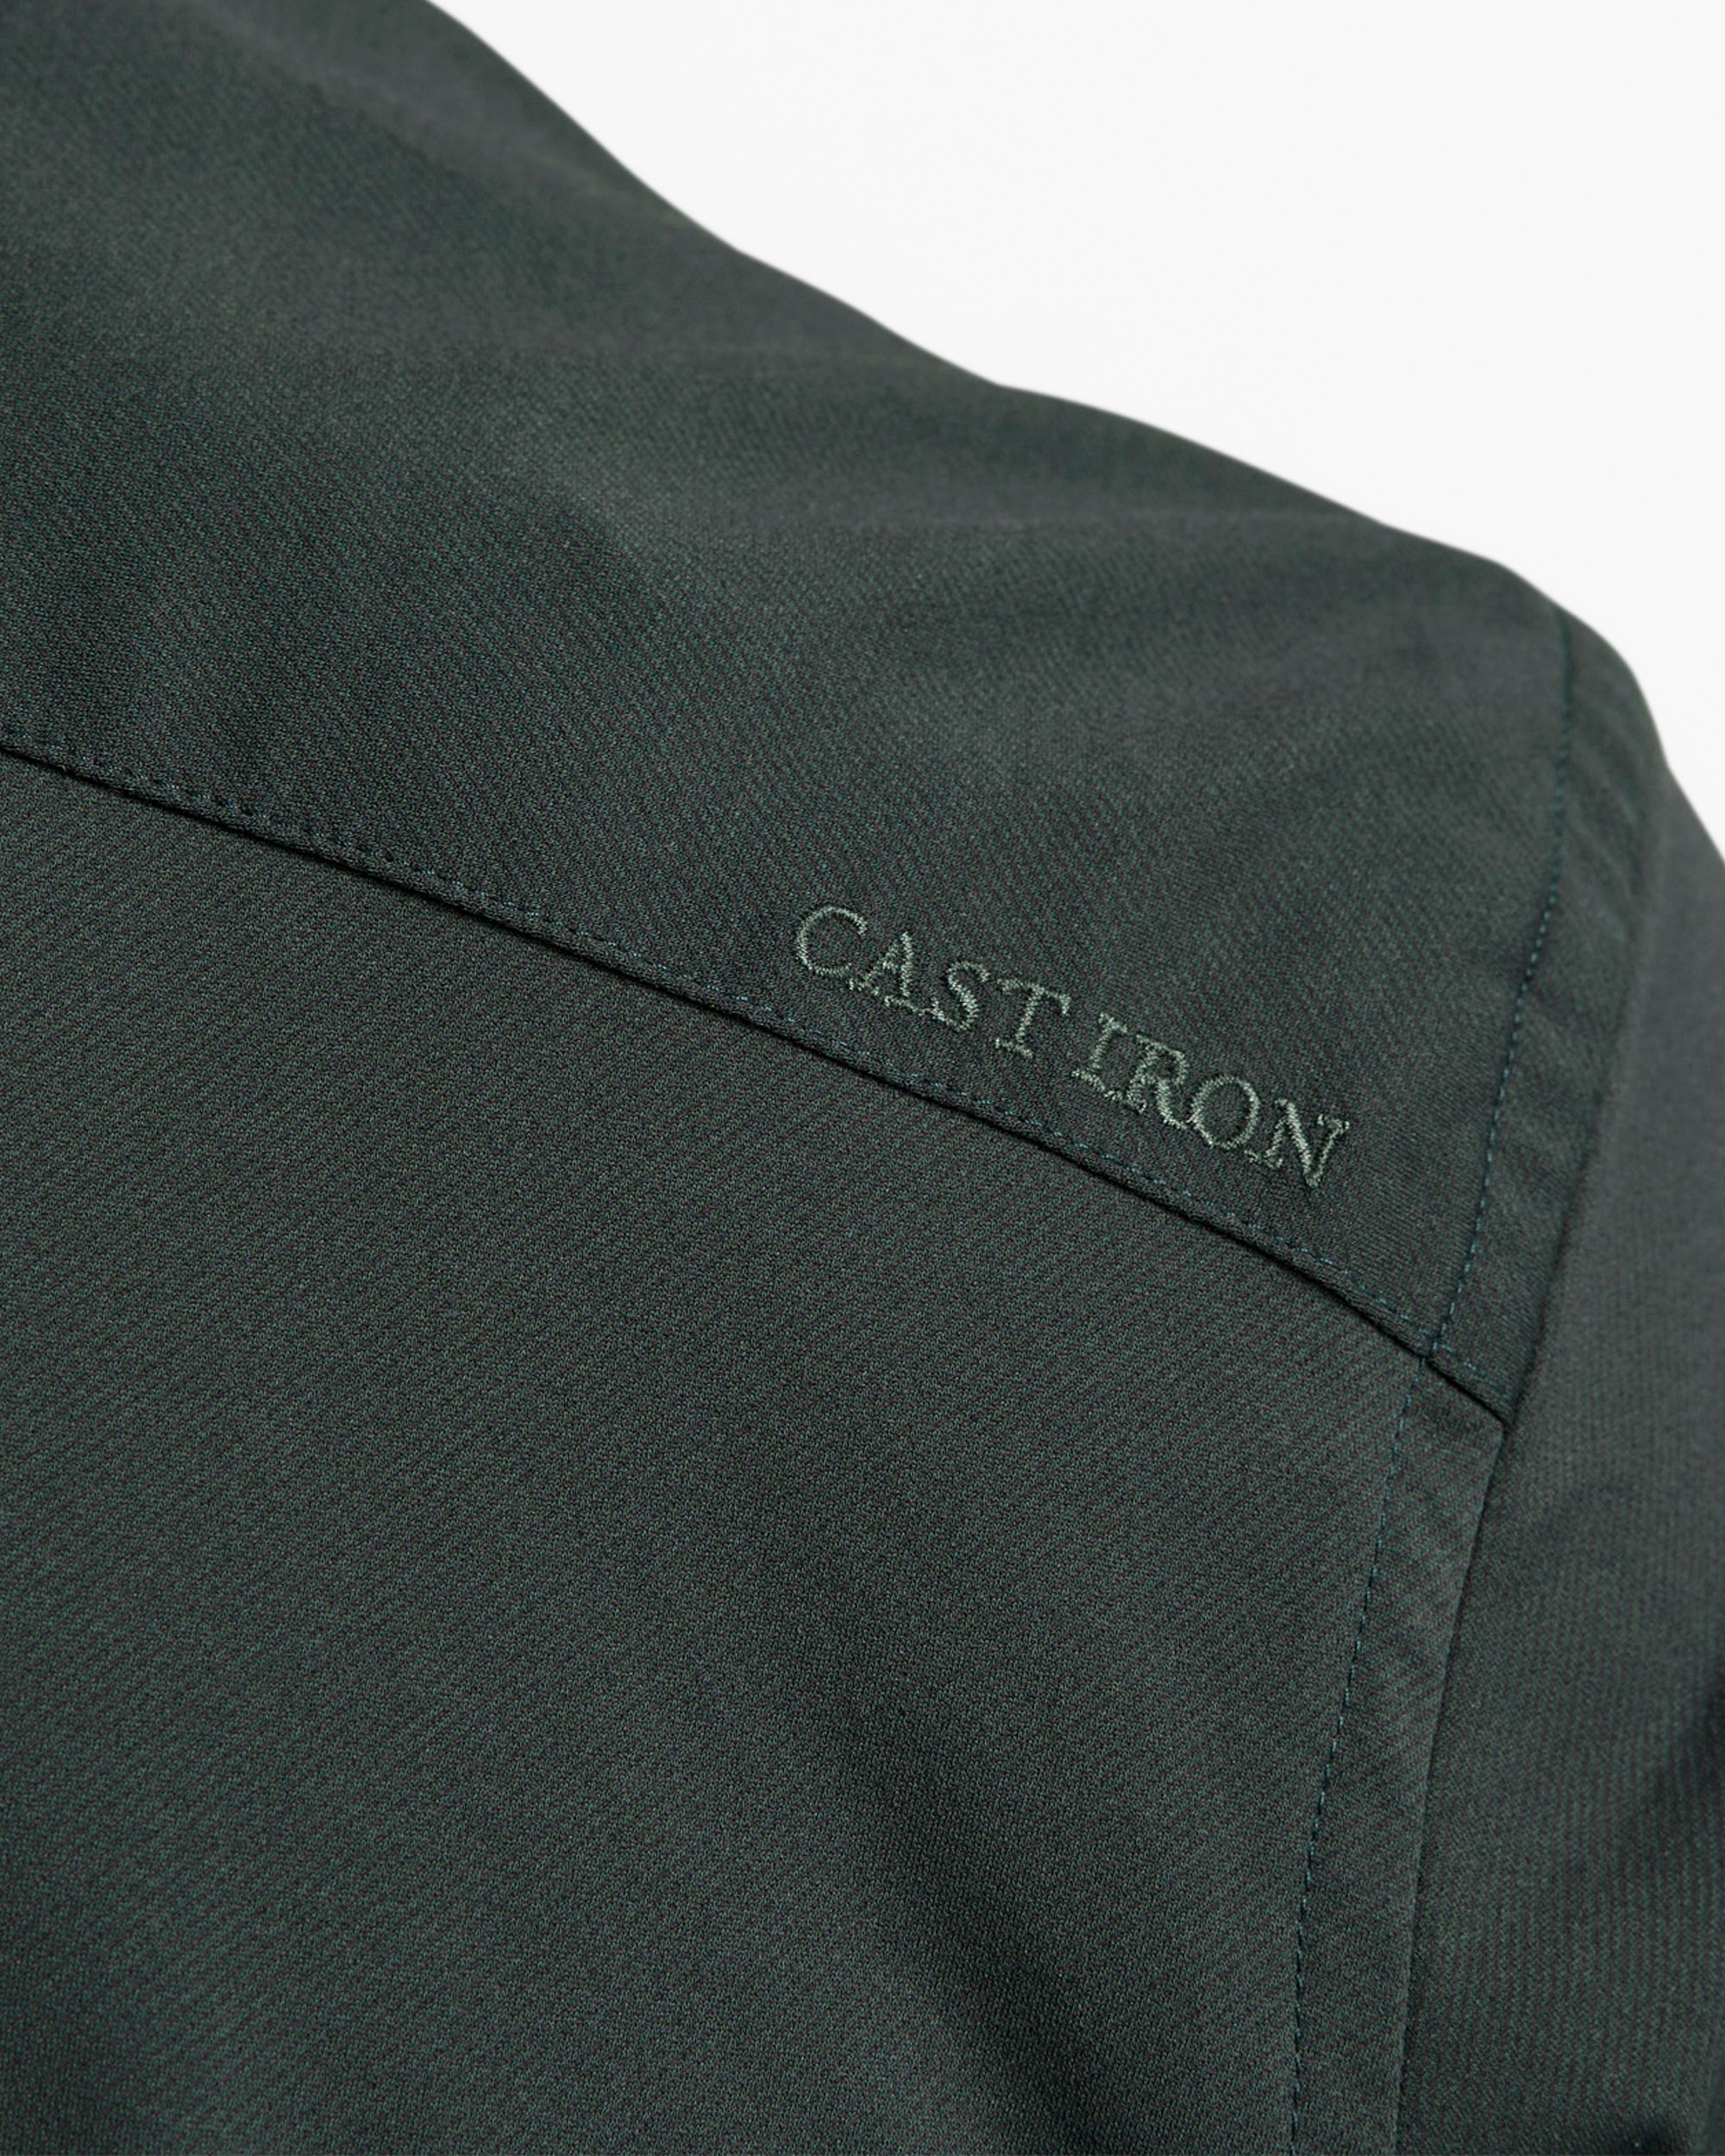 Cast Iron Casual Overhemd LM Groen 084634-001-L